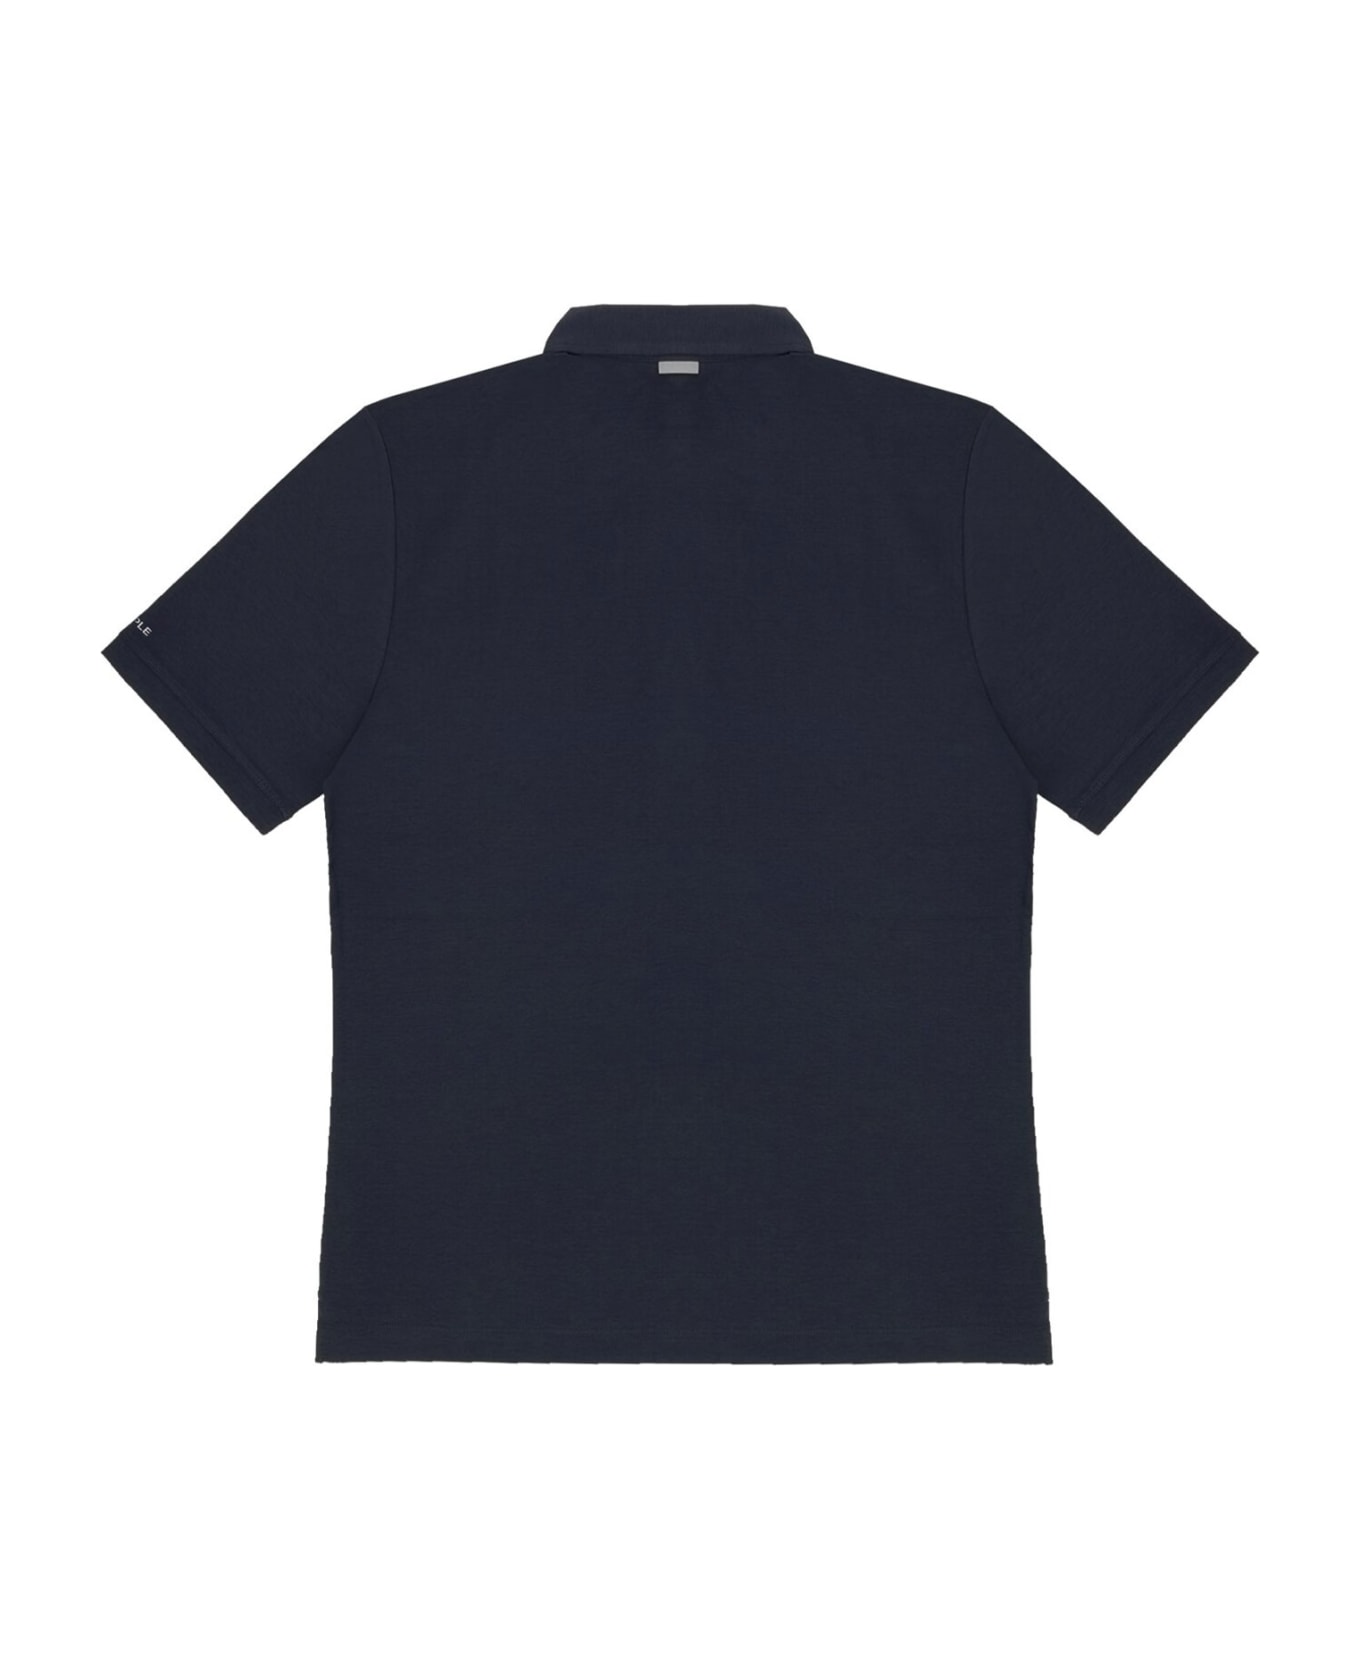 People Of Shibuya Navy Blue Short-sleeved Polo Shirt - Blu ポロシャツ